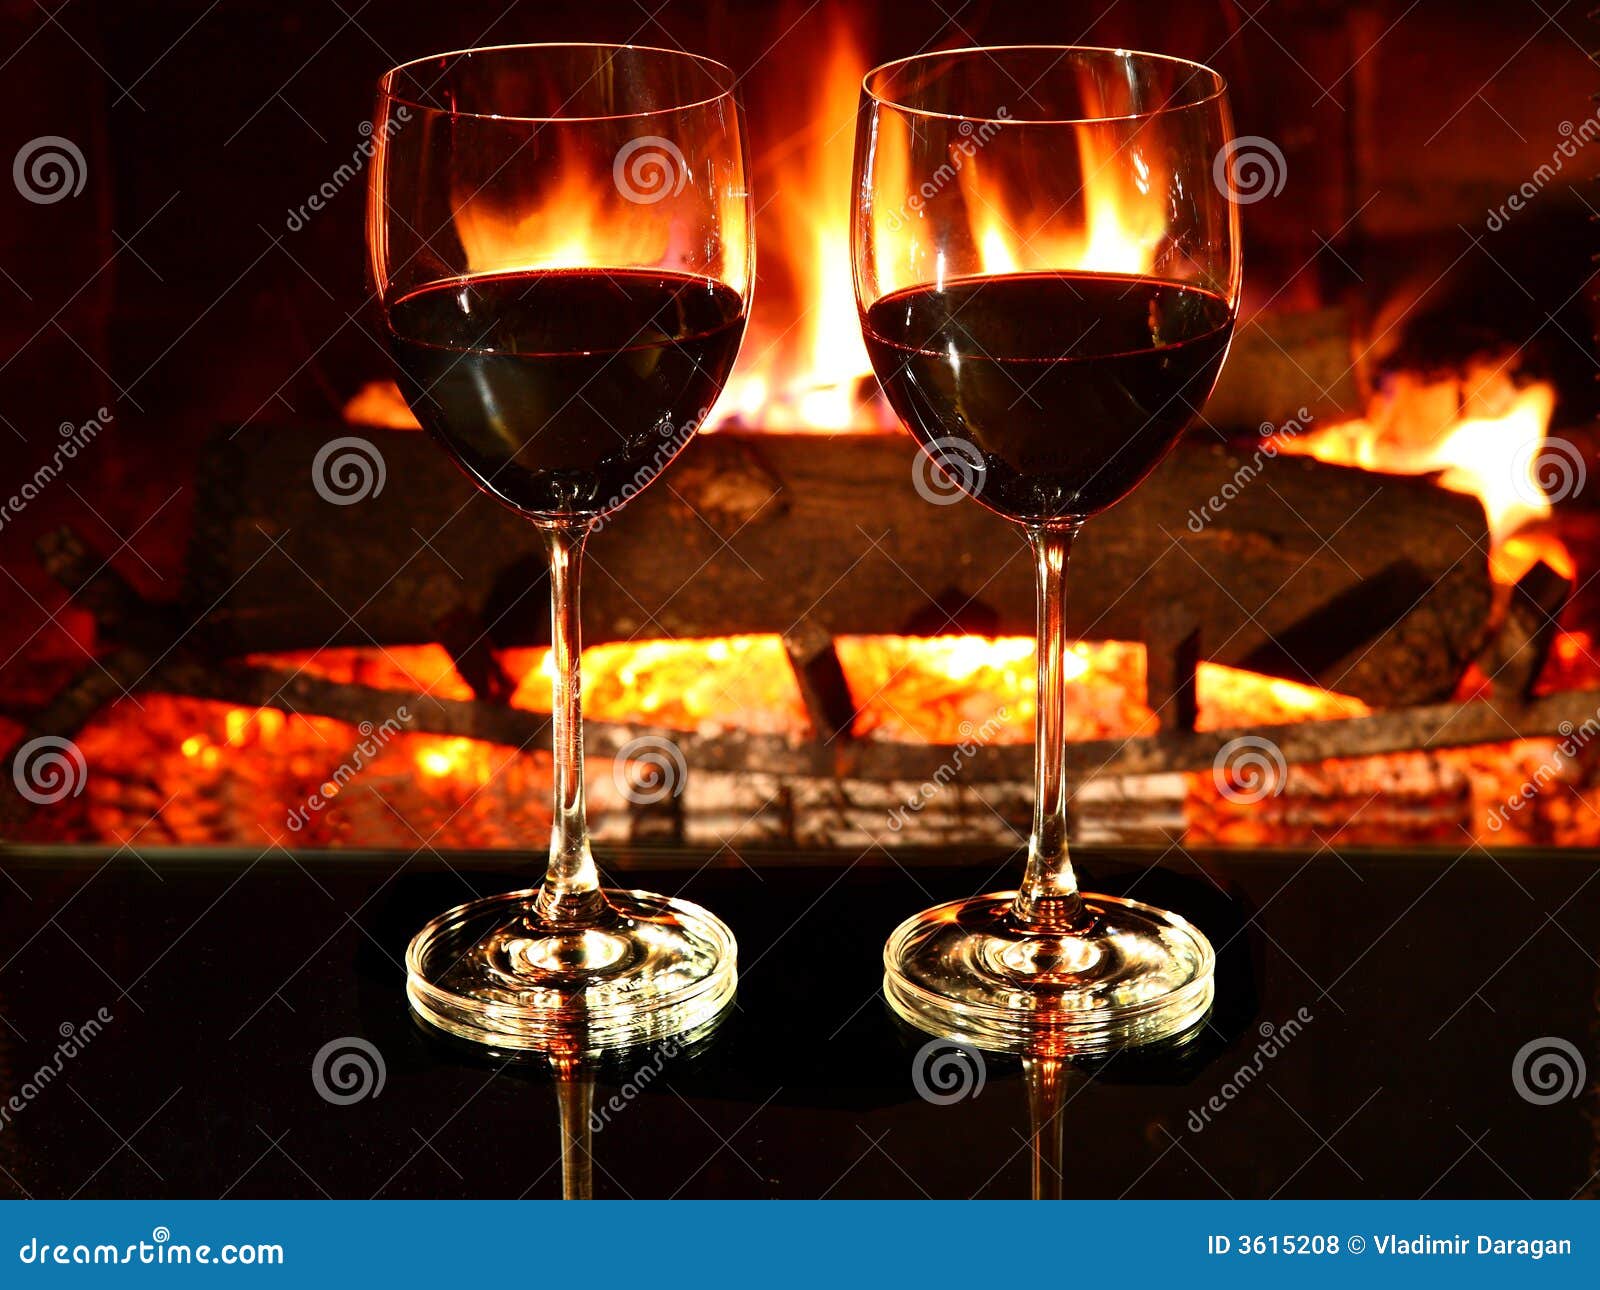 romantic dinner, wine, fireplace